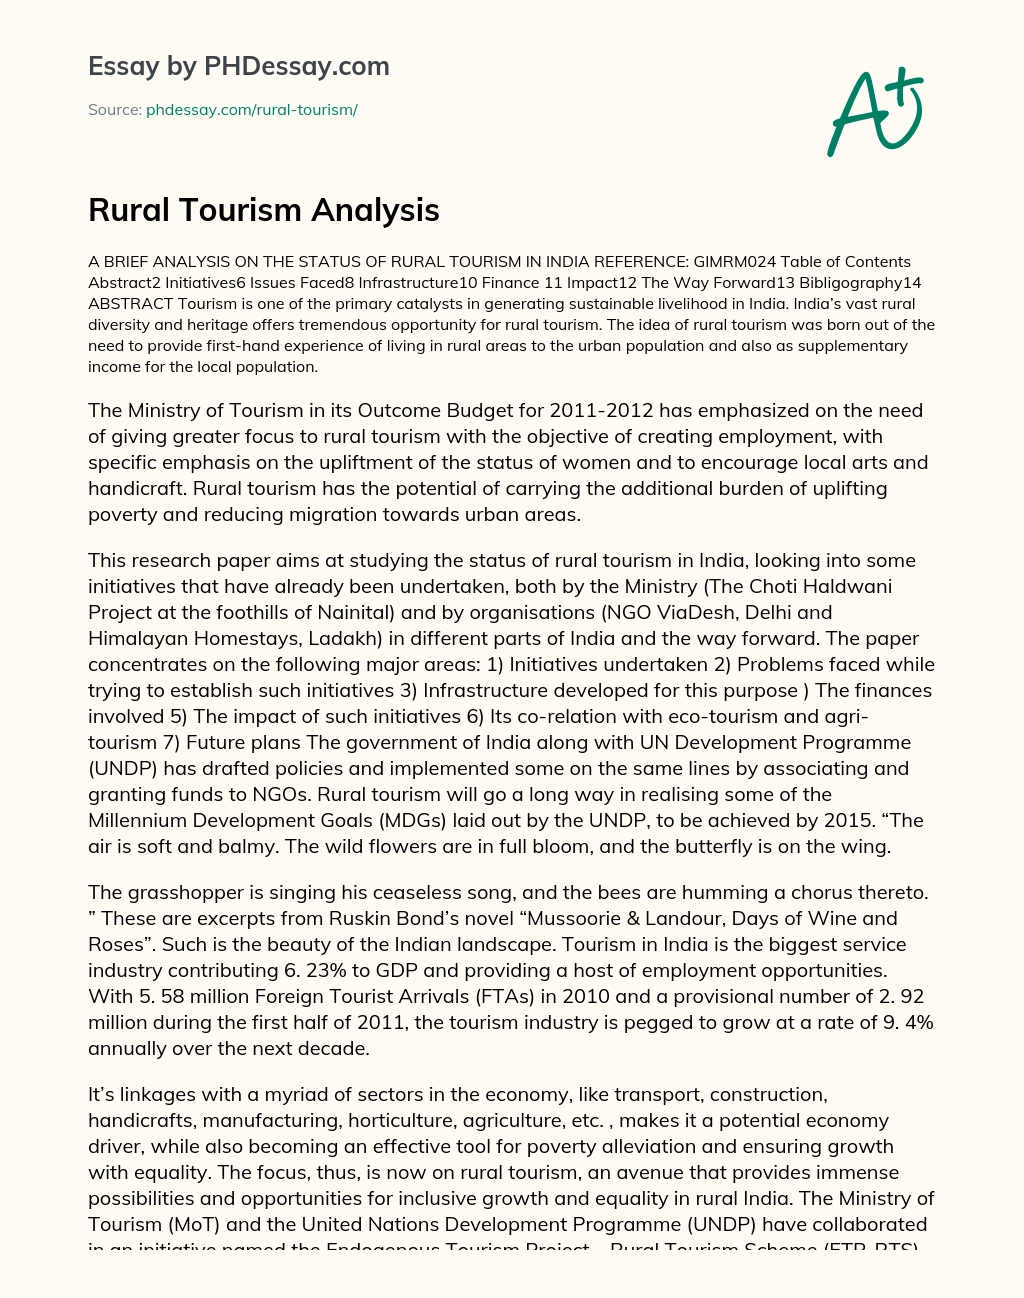 Rural Tourism Analysis essay